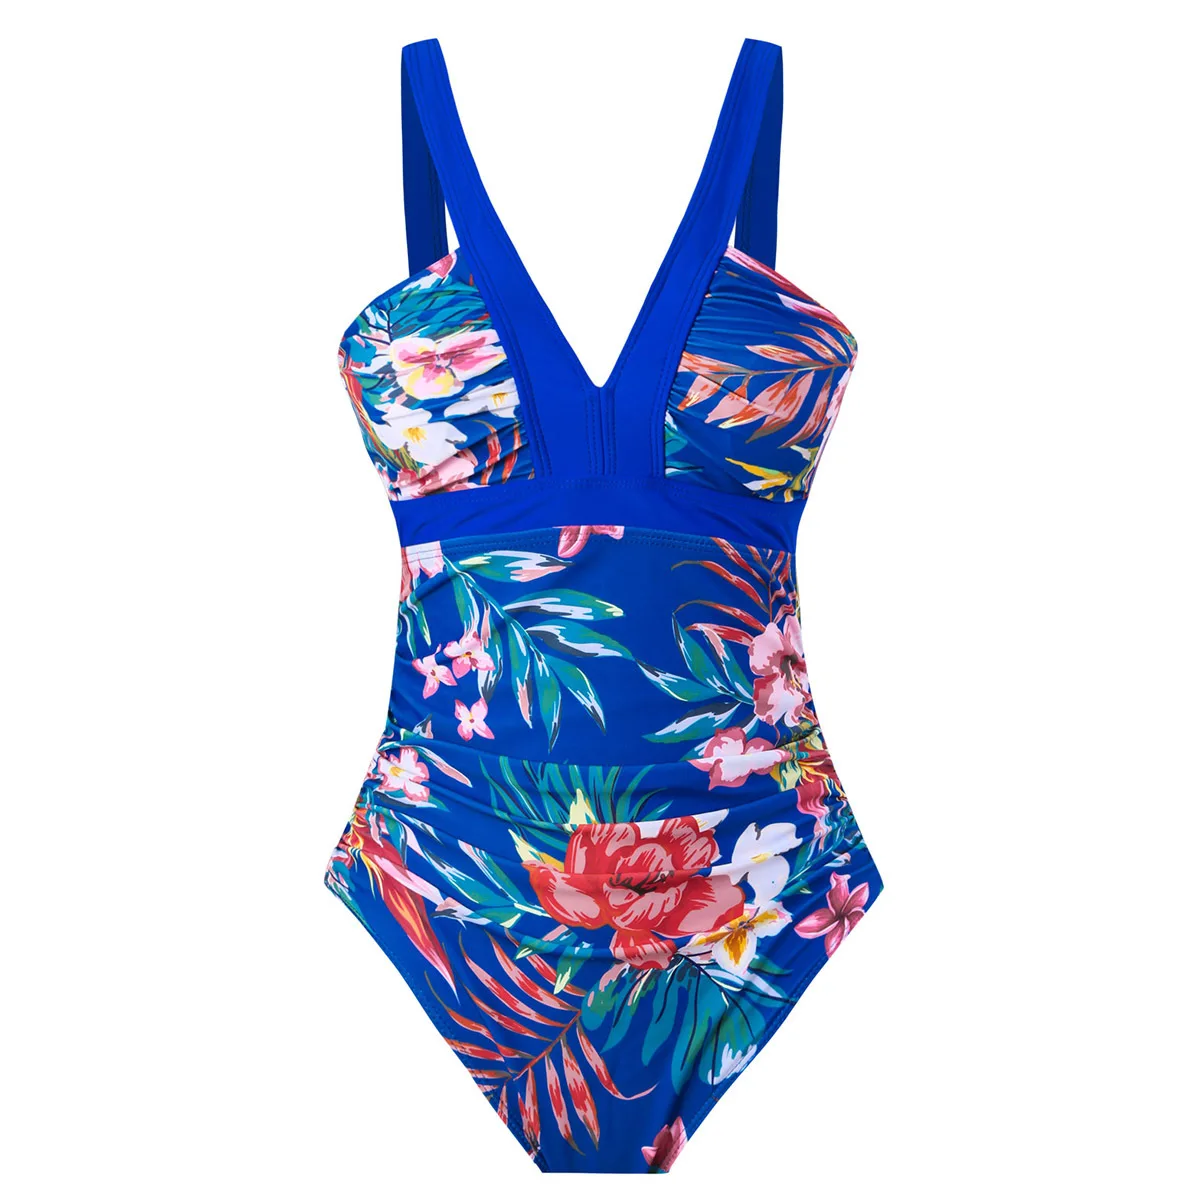 High Quality Women's Swimwear Floral Pattern One Piece Swimsuit Women's Sensual Bikini Swimsuit Bikini Suit